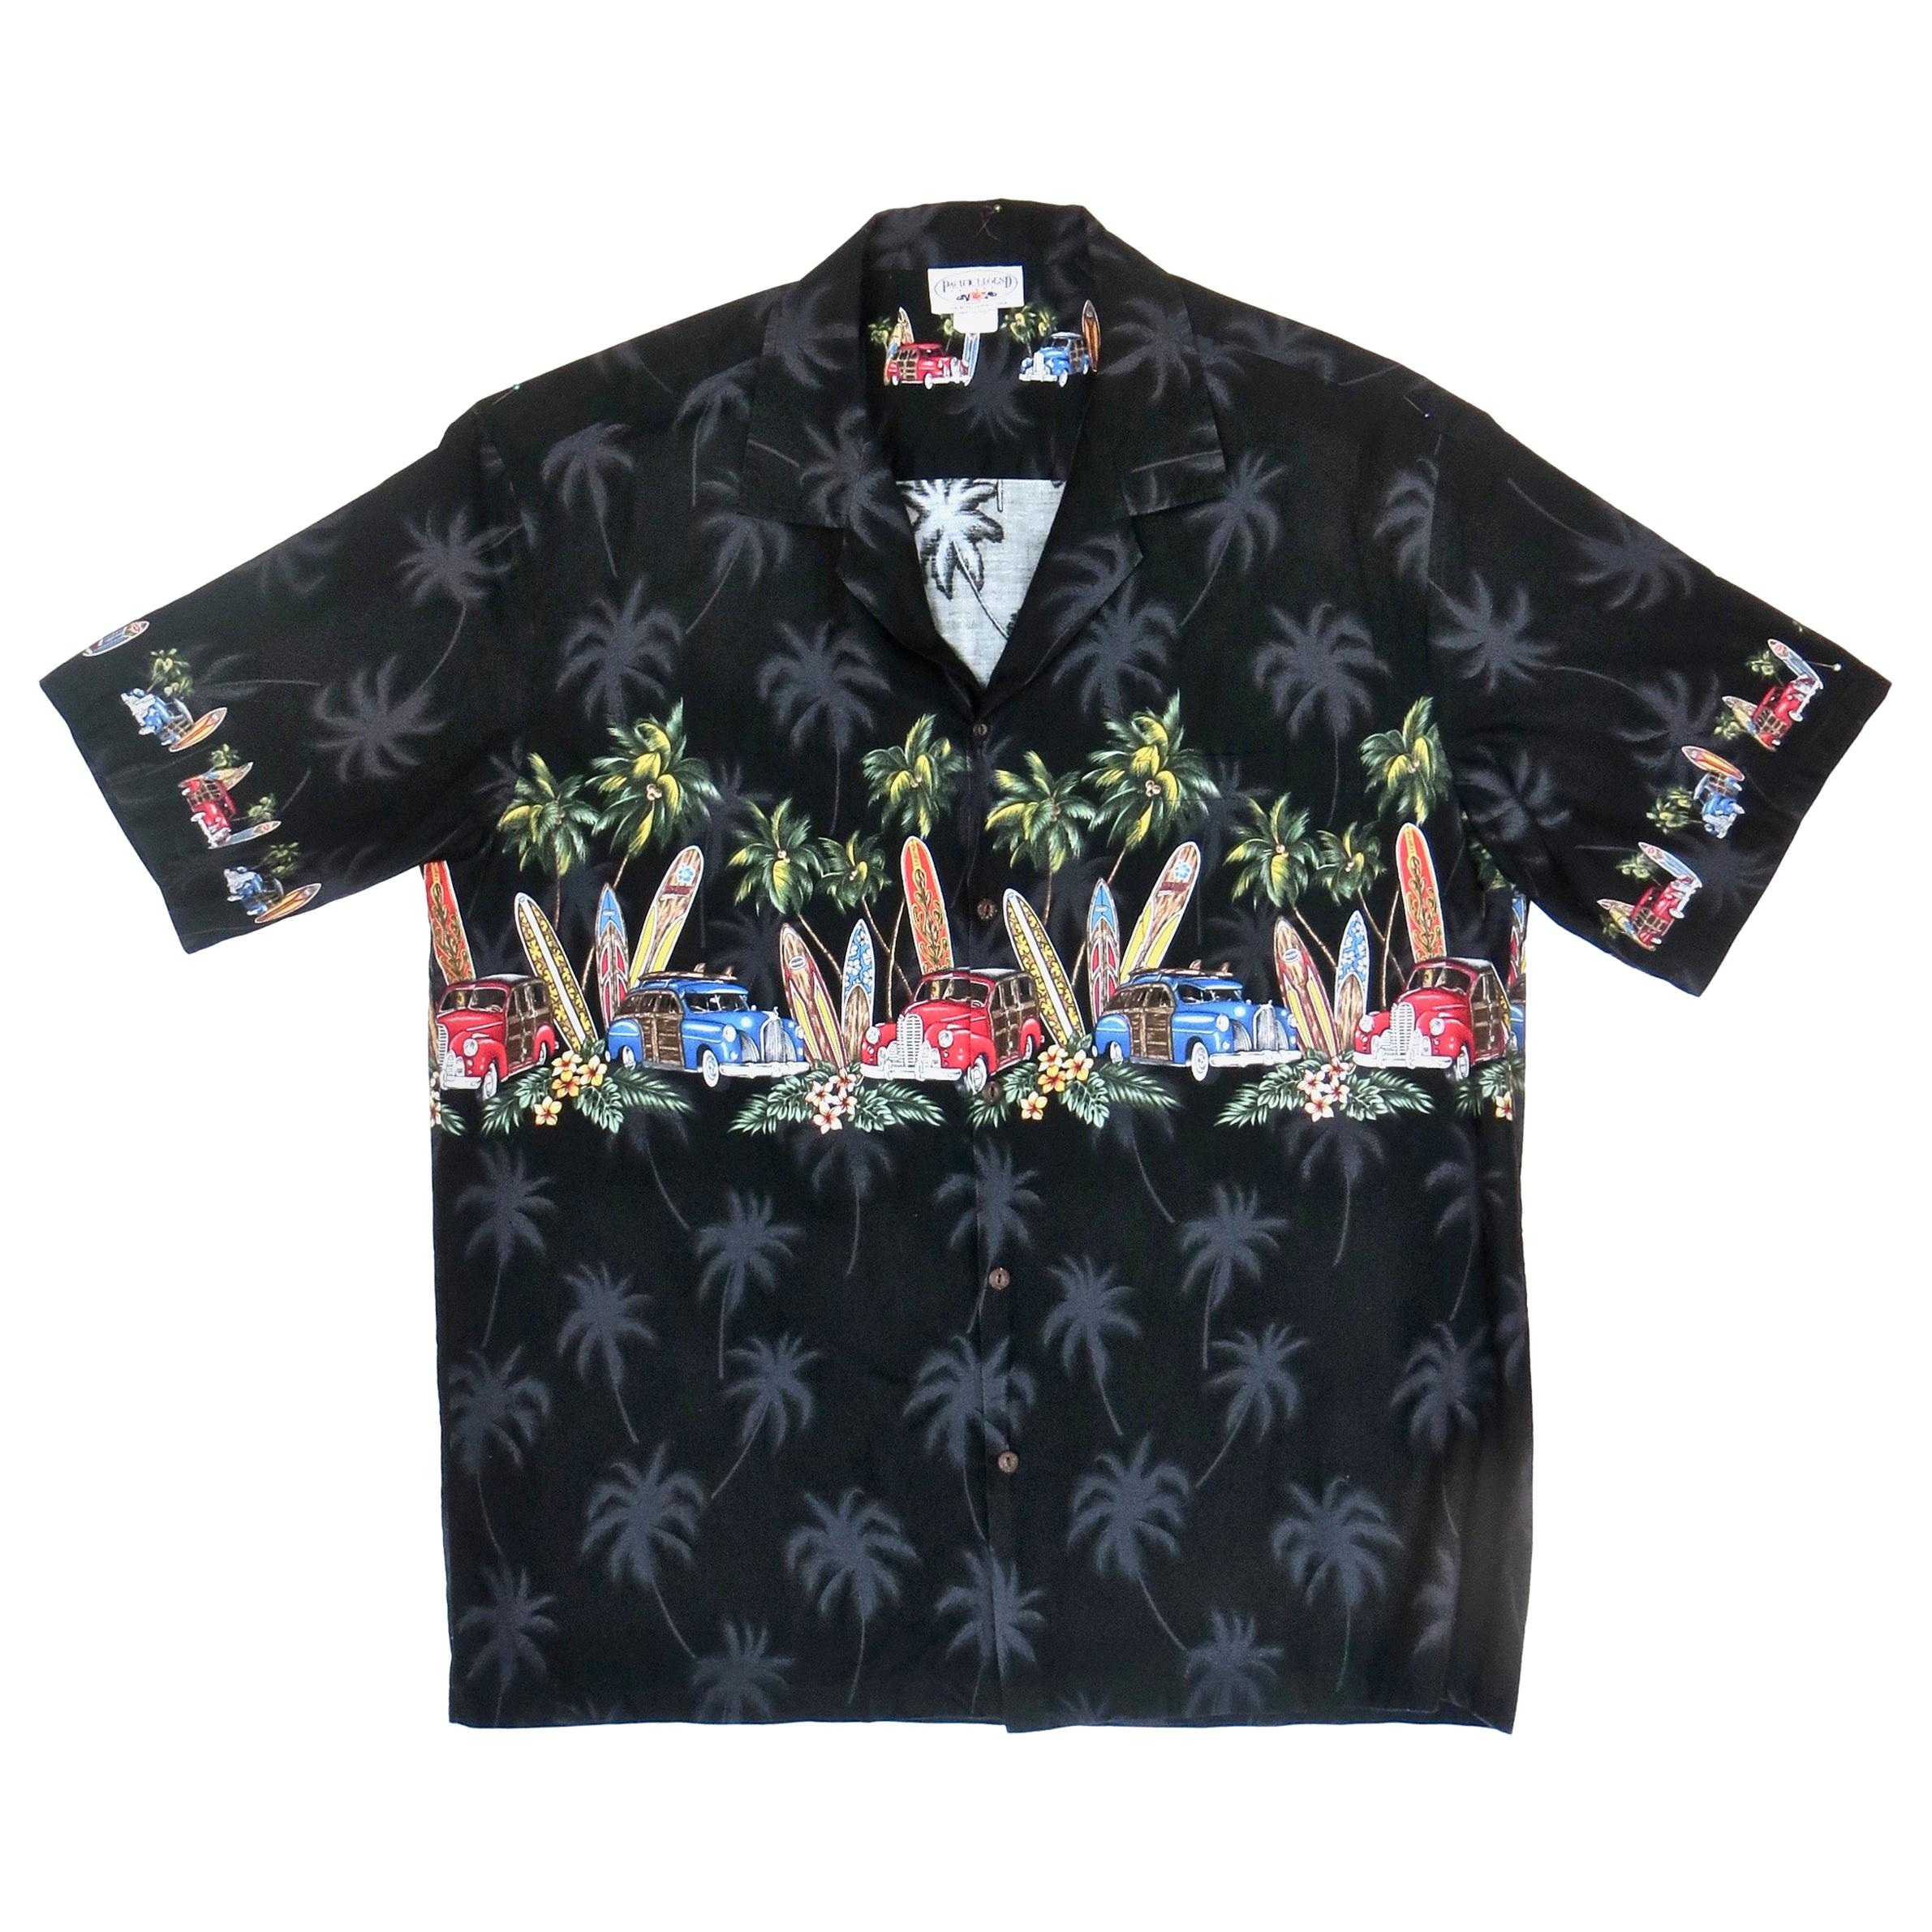 Vintage Hawaiian Shirt, Surfboards and Woodies Motif, Men's 2X-Large